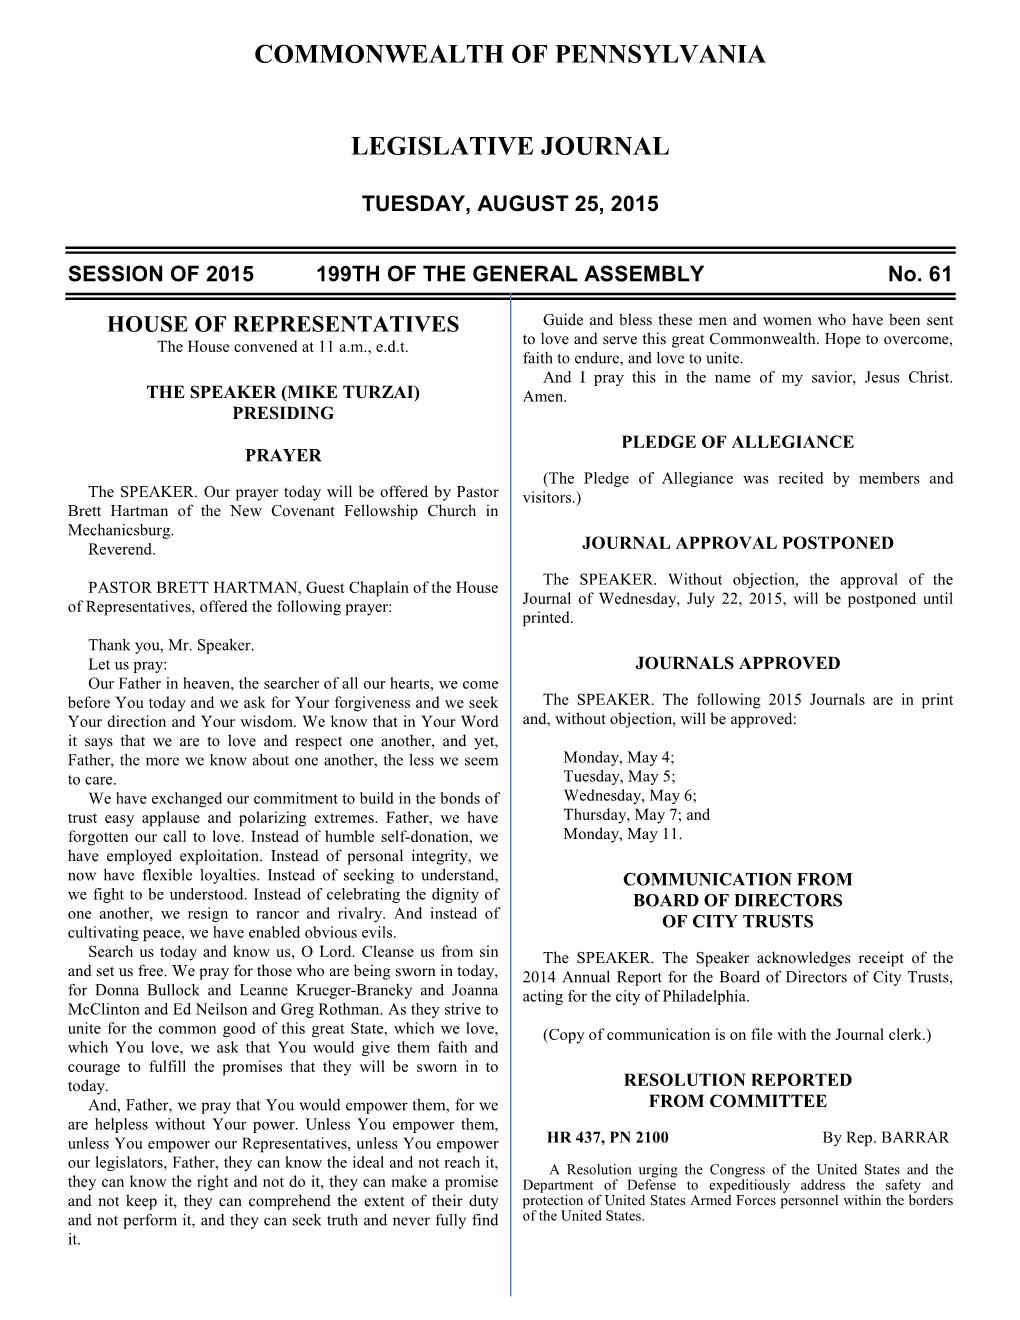 Commonwealth of Pennsylvania Legislative Reference Bureau to Override the Governor's General Veto of House Bill 1192, Printer's